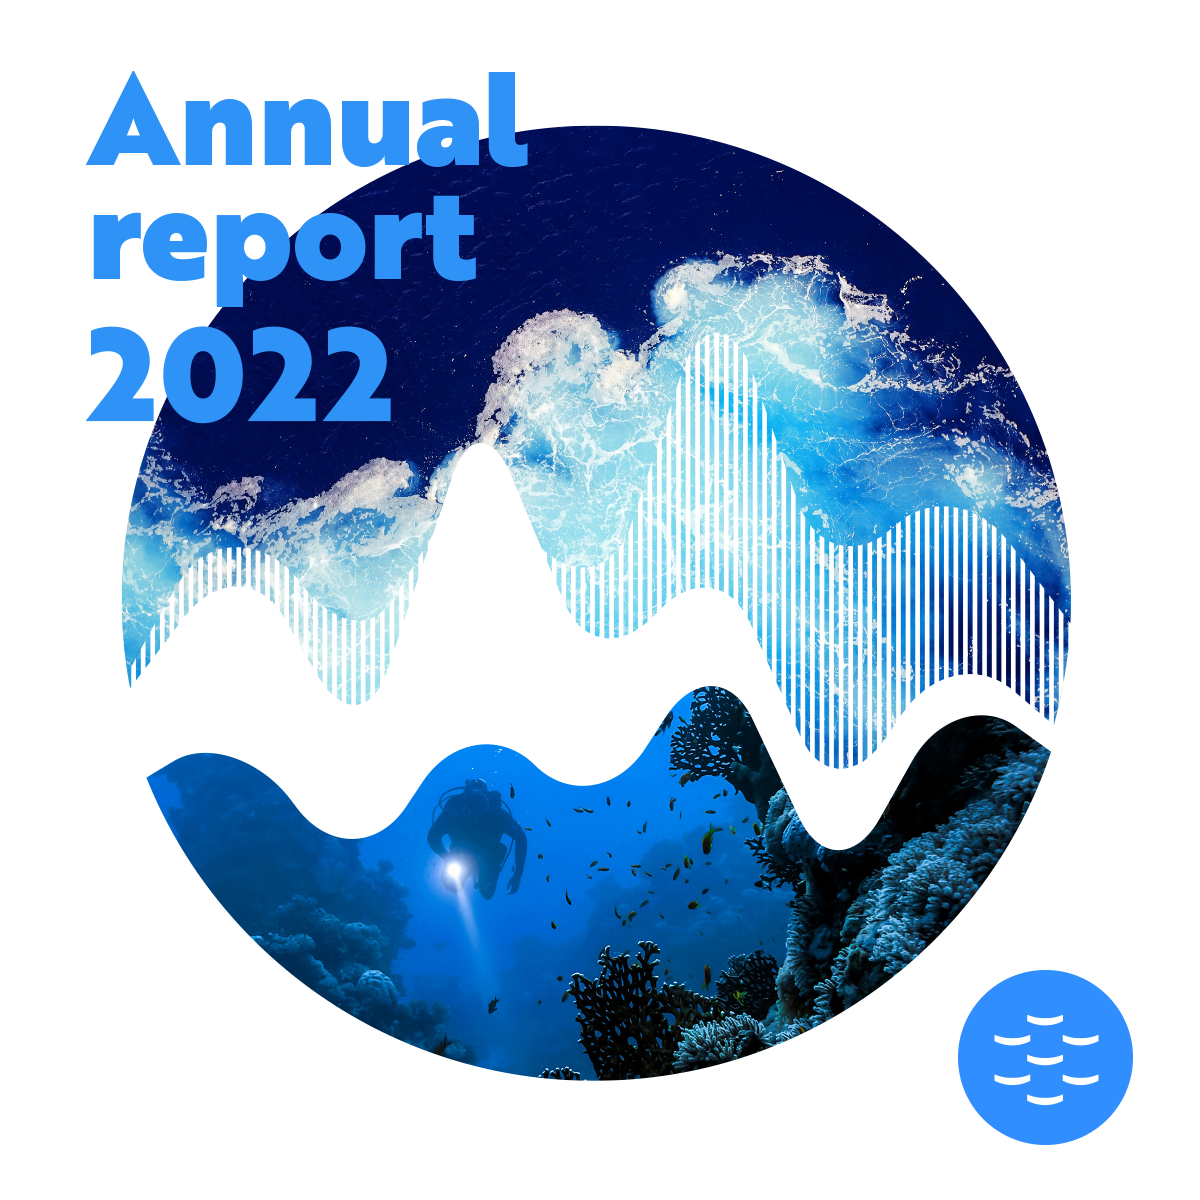 annual report, marine biodiversity, oceans, marine science, marine observation